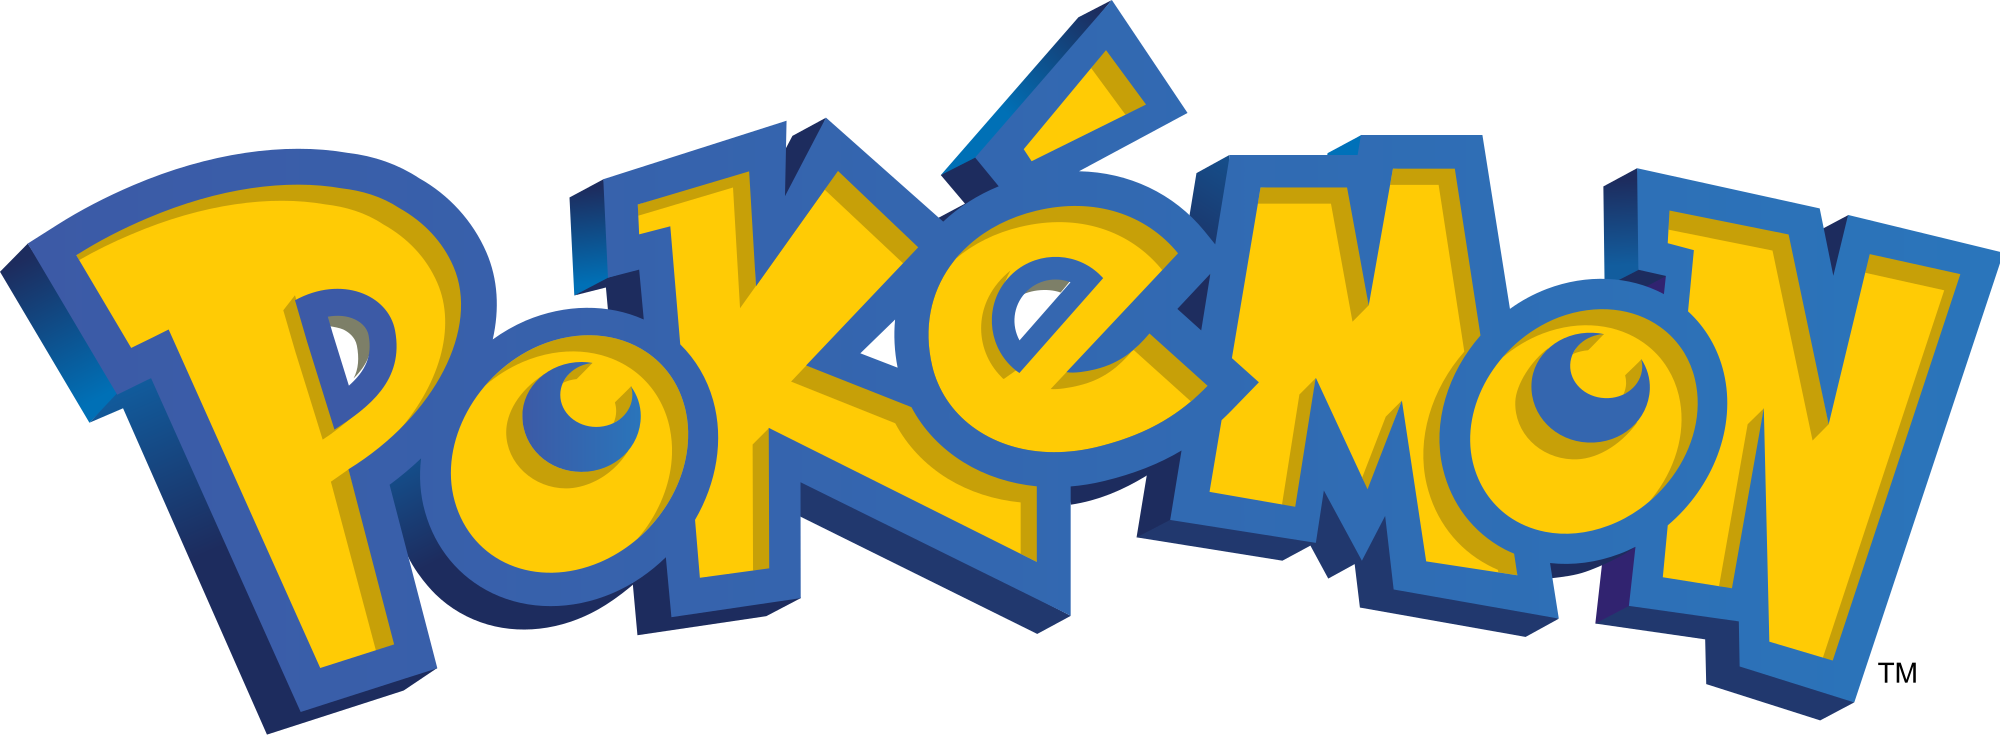 Classic Pokemon yellow and blue text logo